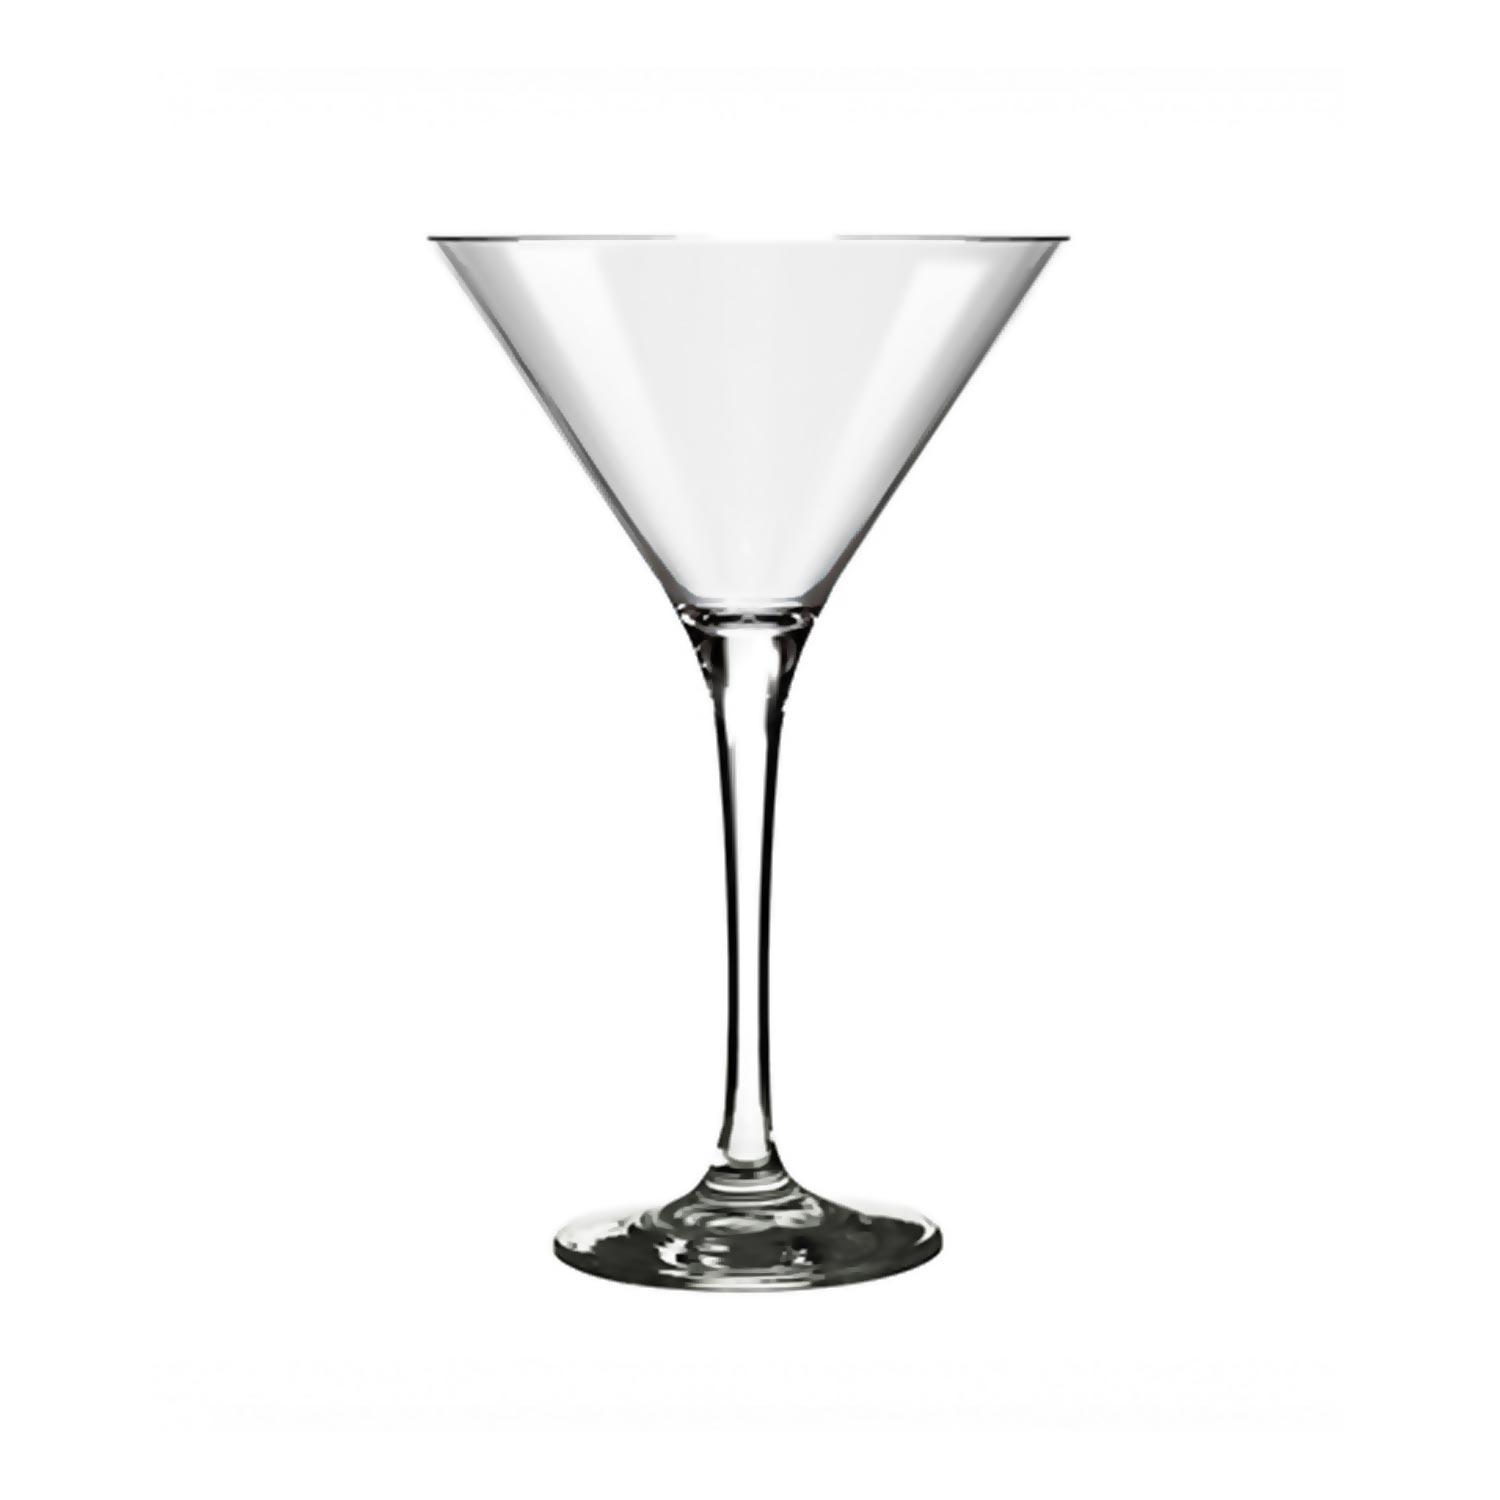 http://www.mayrand.ca/globalassets/mayrand/catalog-mayrand/articles-de-cuisine/27260-verre-a-martini-windsor-85-oz---250-ml.jpg